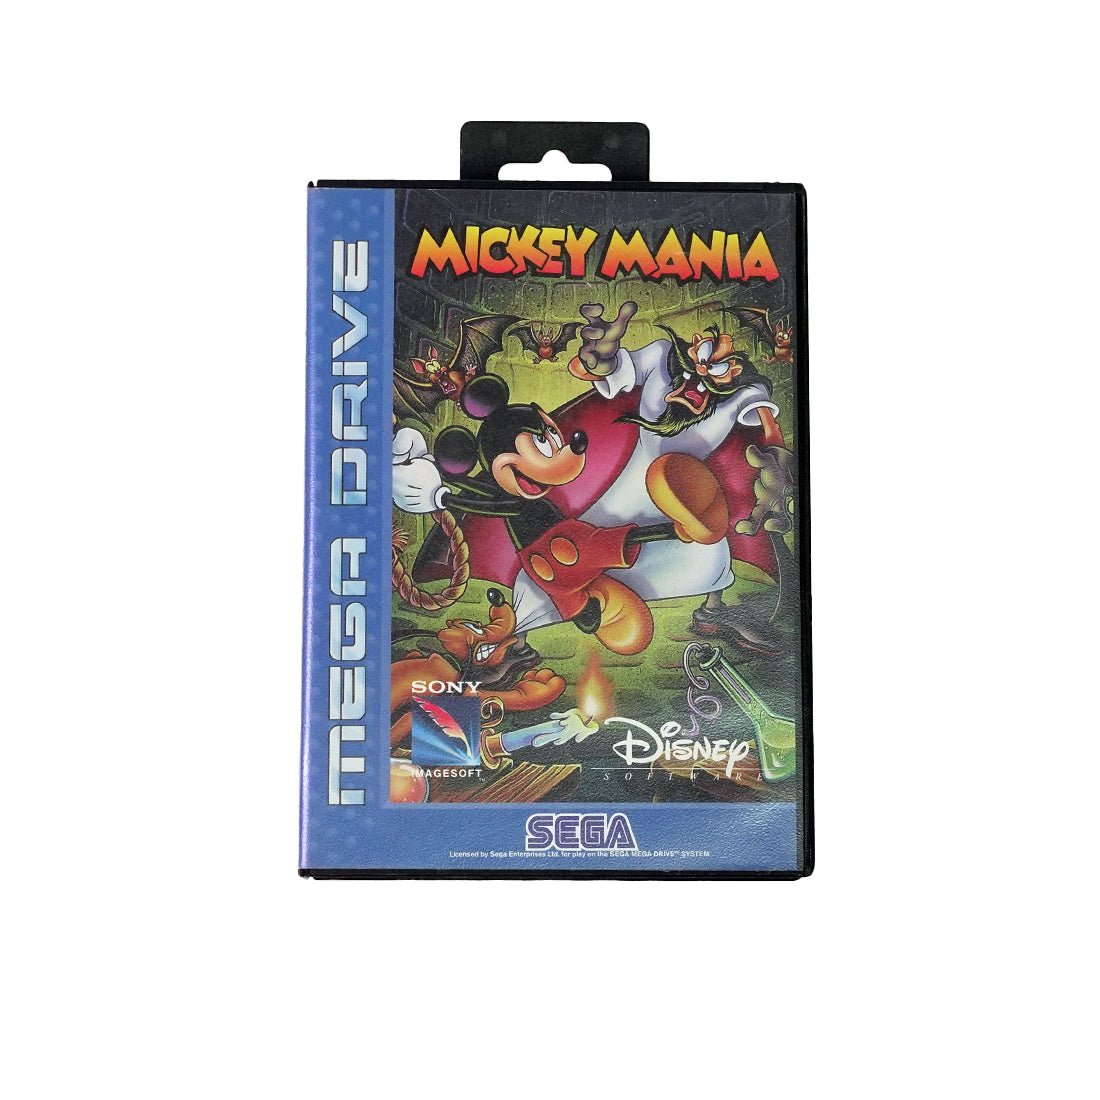 (Pre-Owned) Mickey Mania Game - Sega Mega - ريترو - Store 974 | ستور ٩٧٤